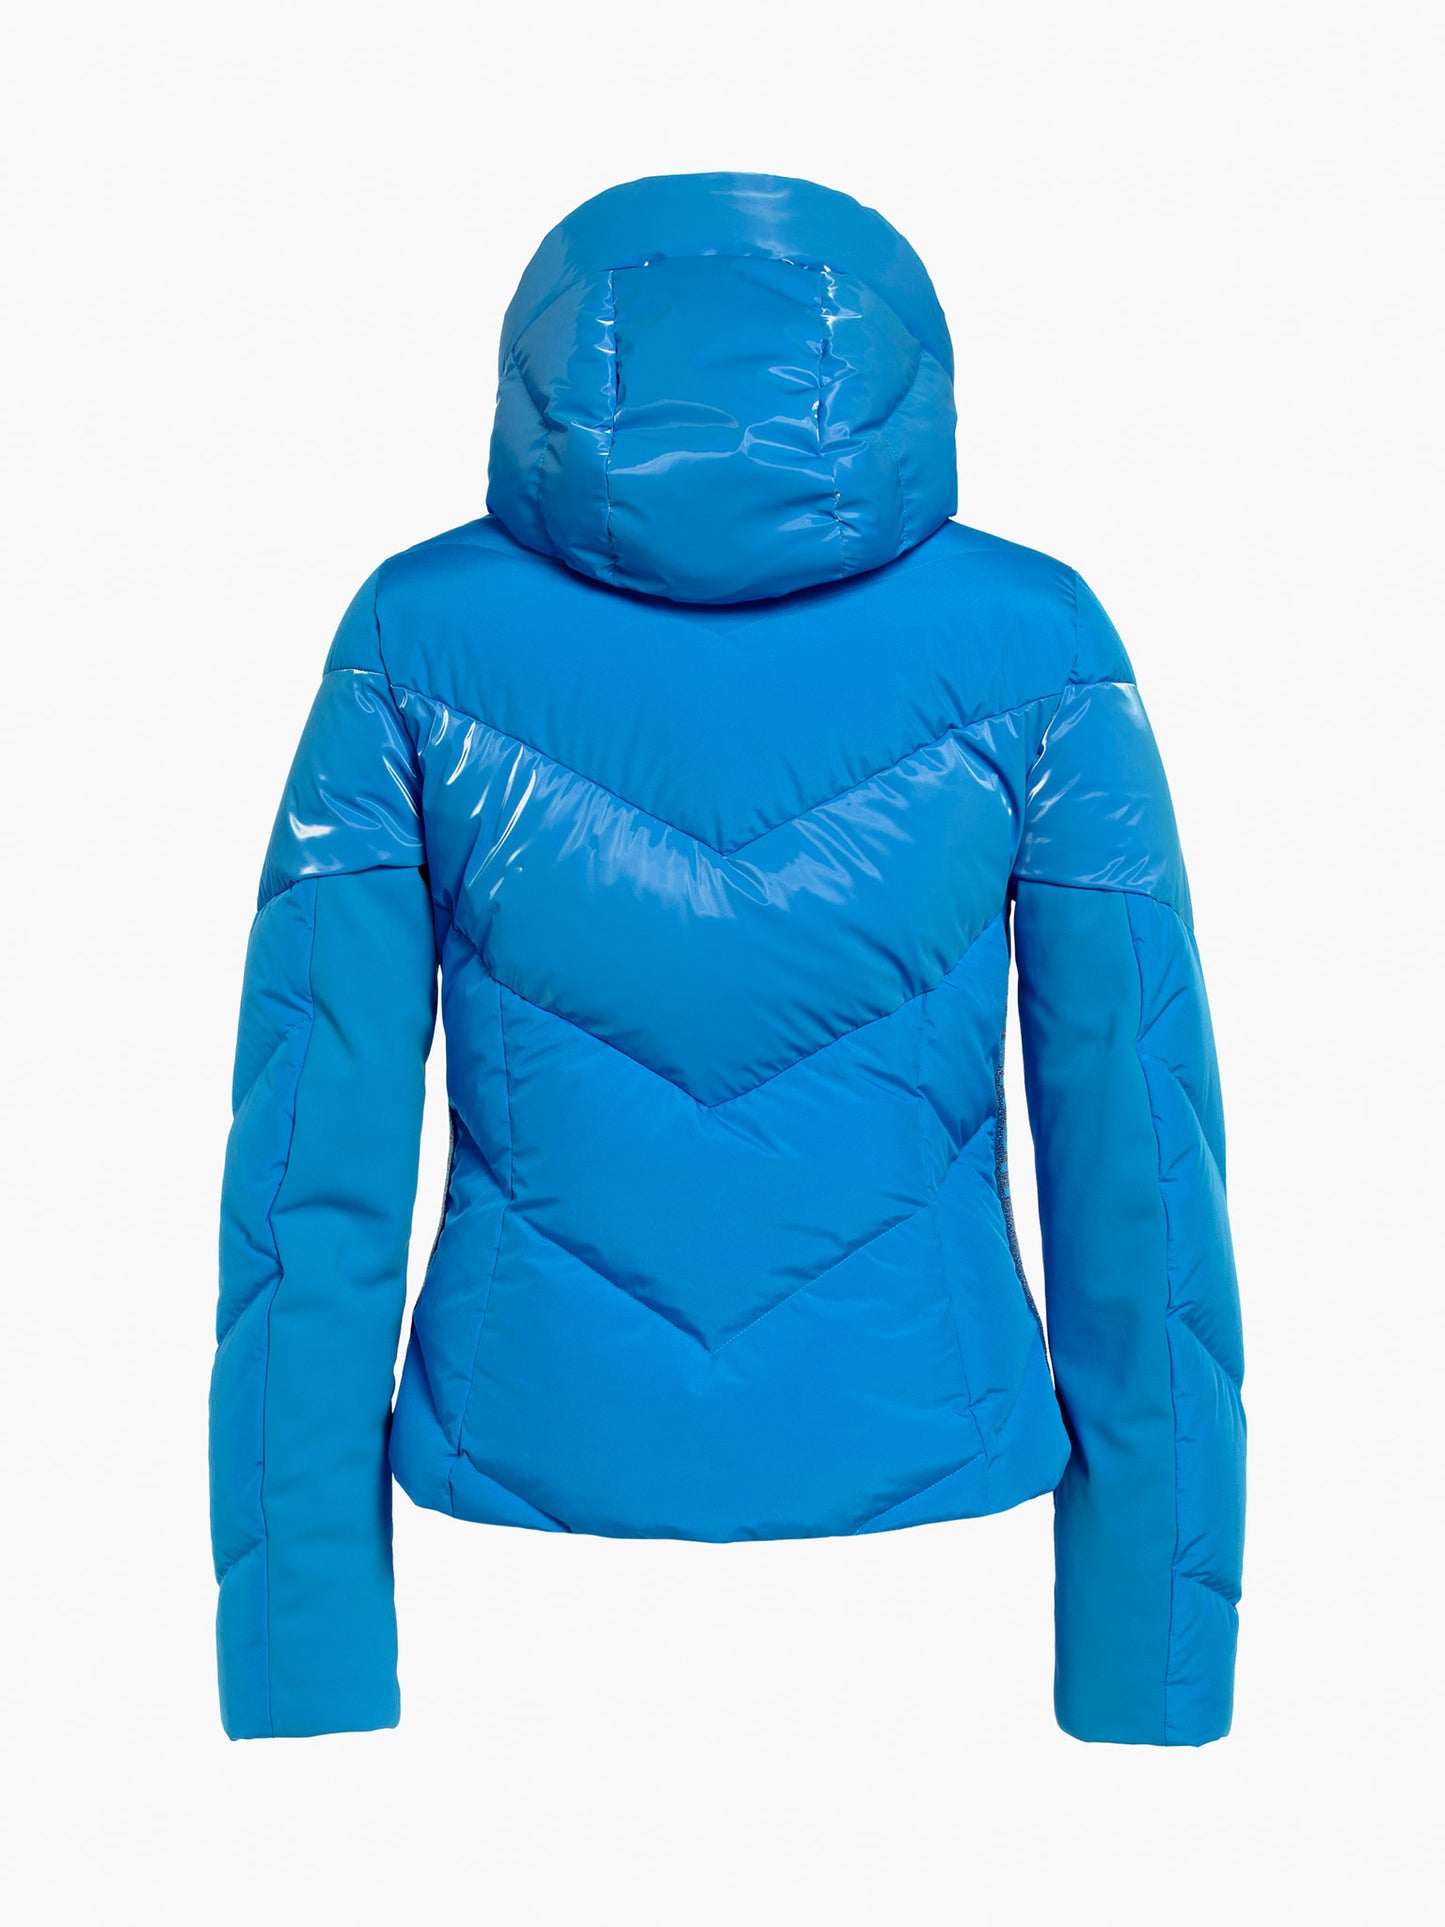 Compra Engelberg giacca da sci uomo ALBRIGHT in blu